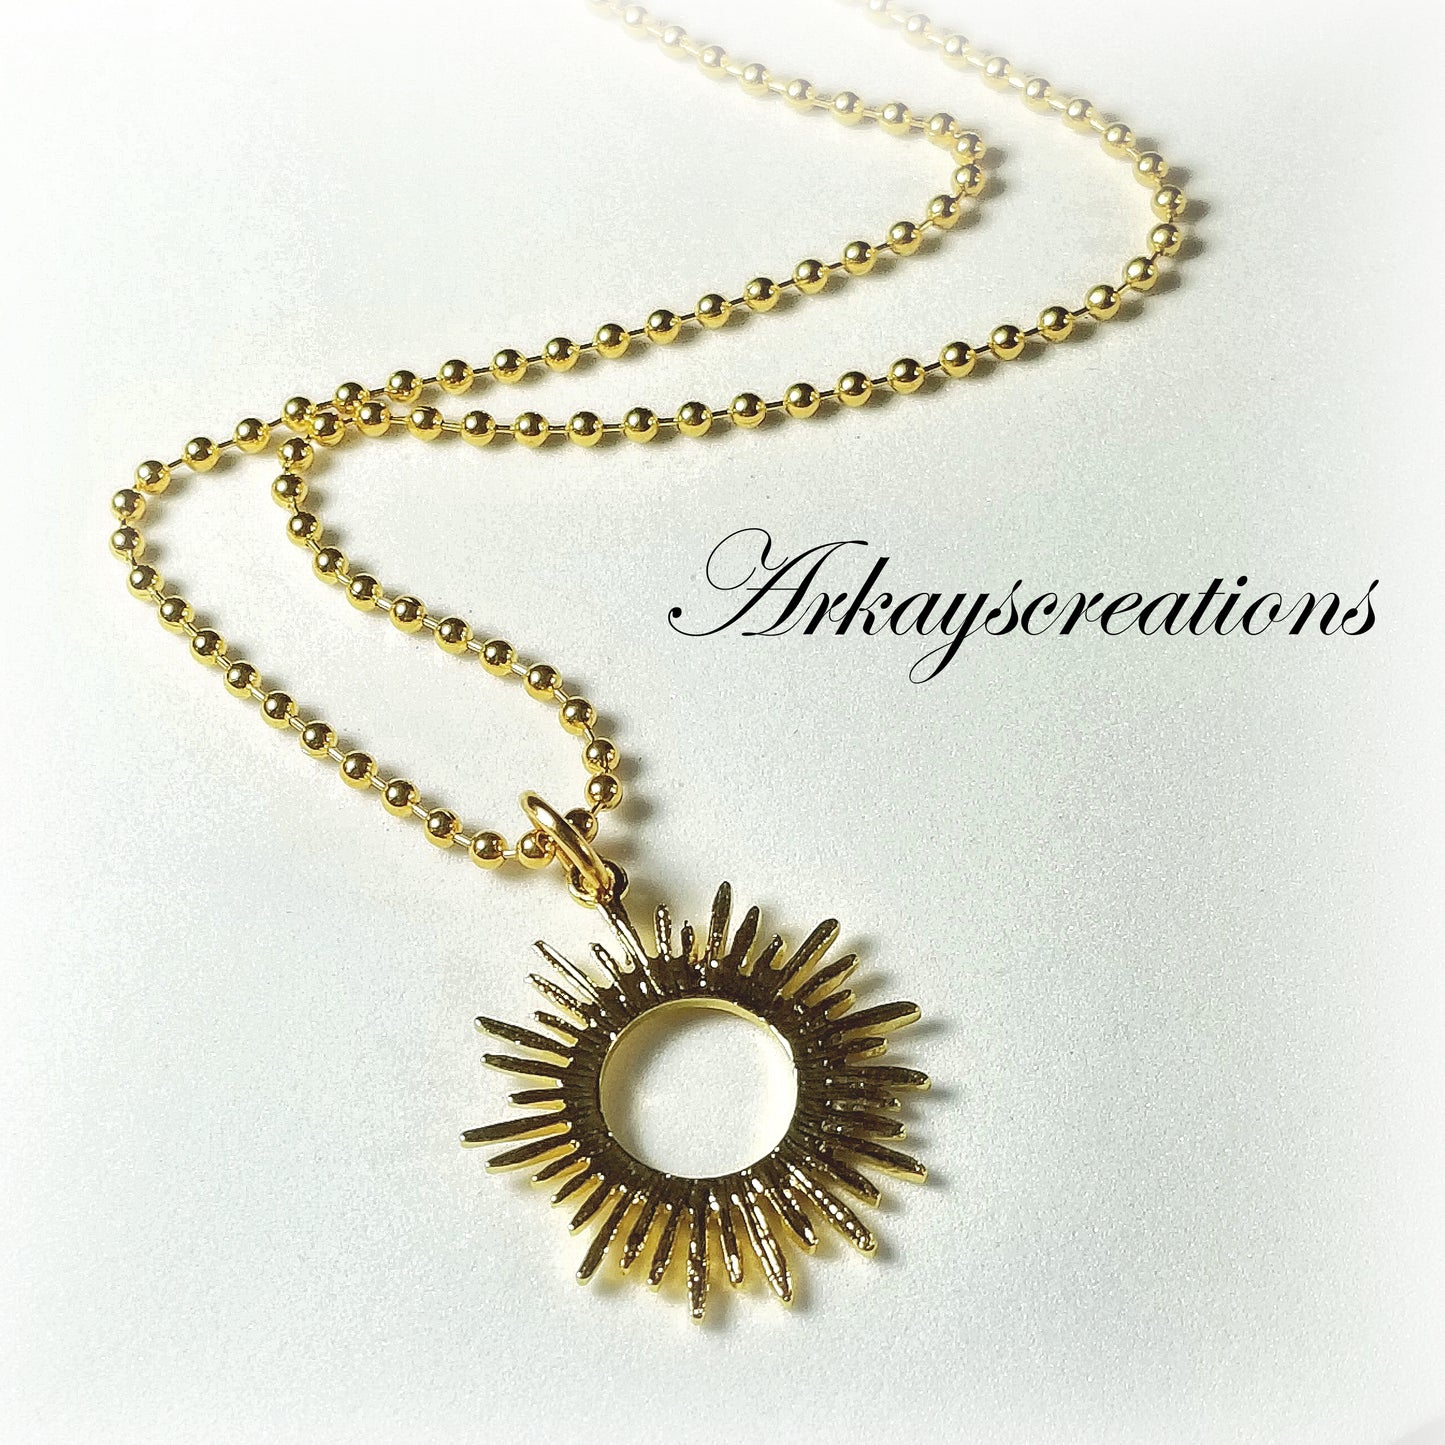 Gold Sunburst Necklace, Sun Jewelry, Jewelry Gift Idea